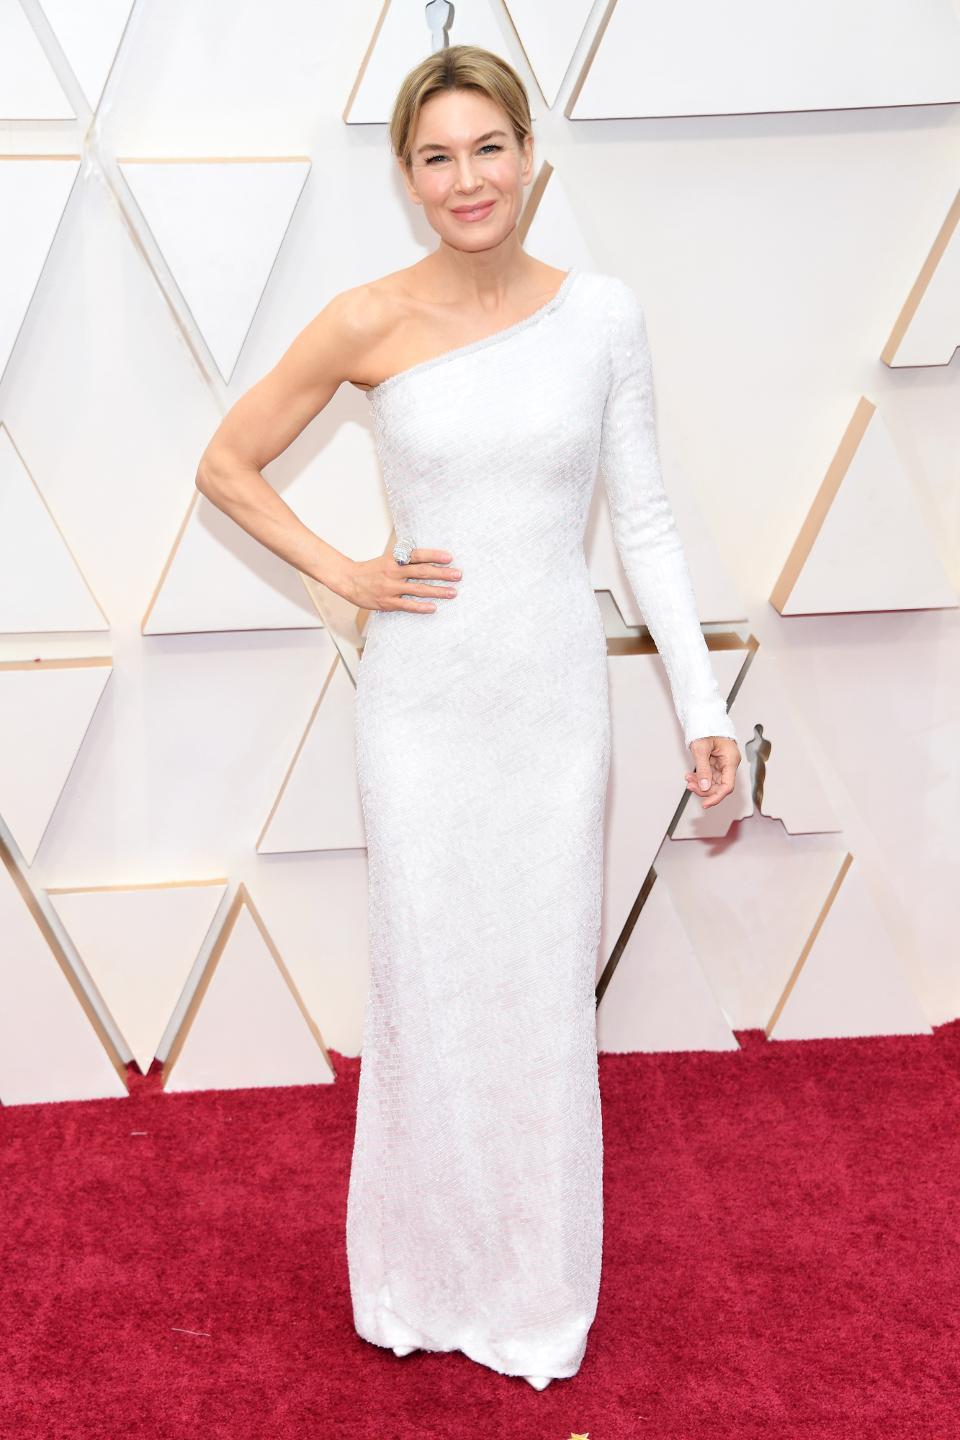 Renée Zellweger Wins Best Actress Oscar For Her Role In 'Judy'